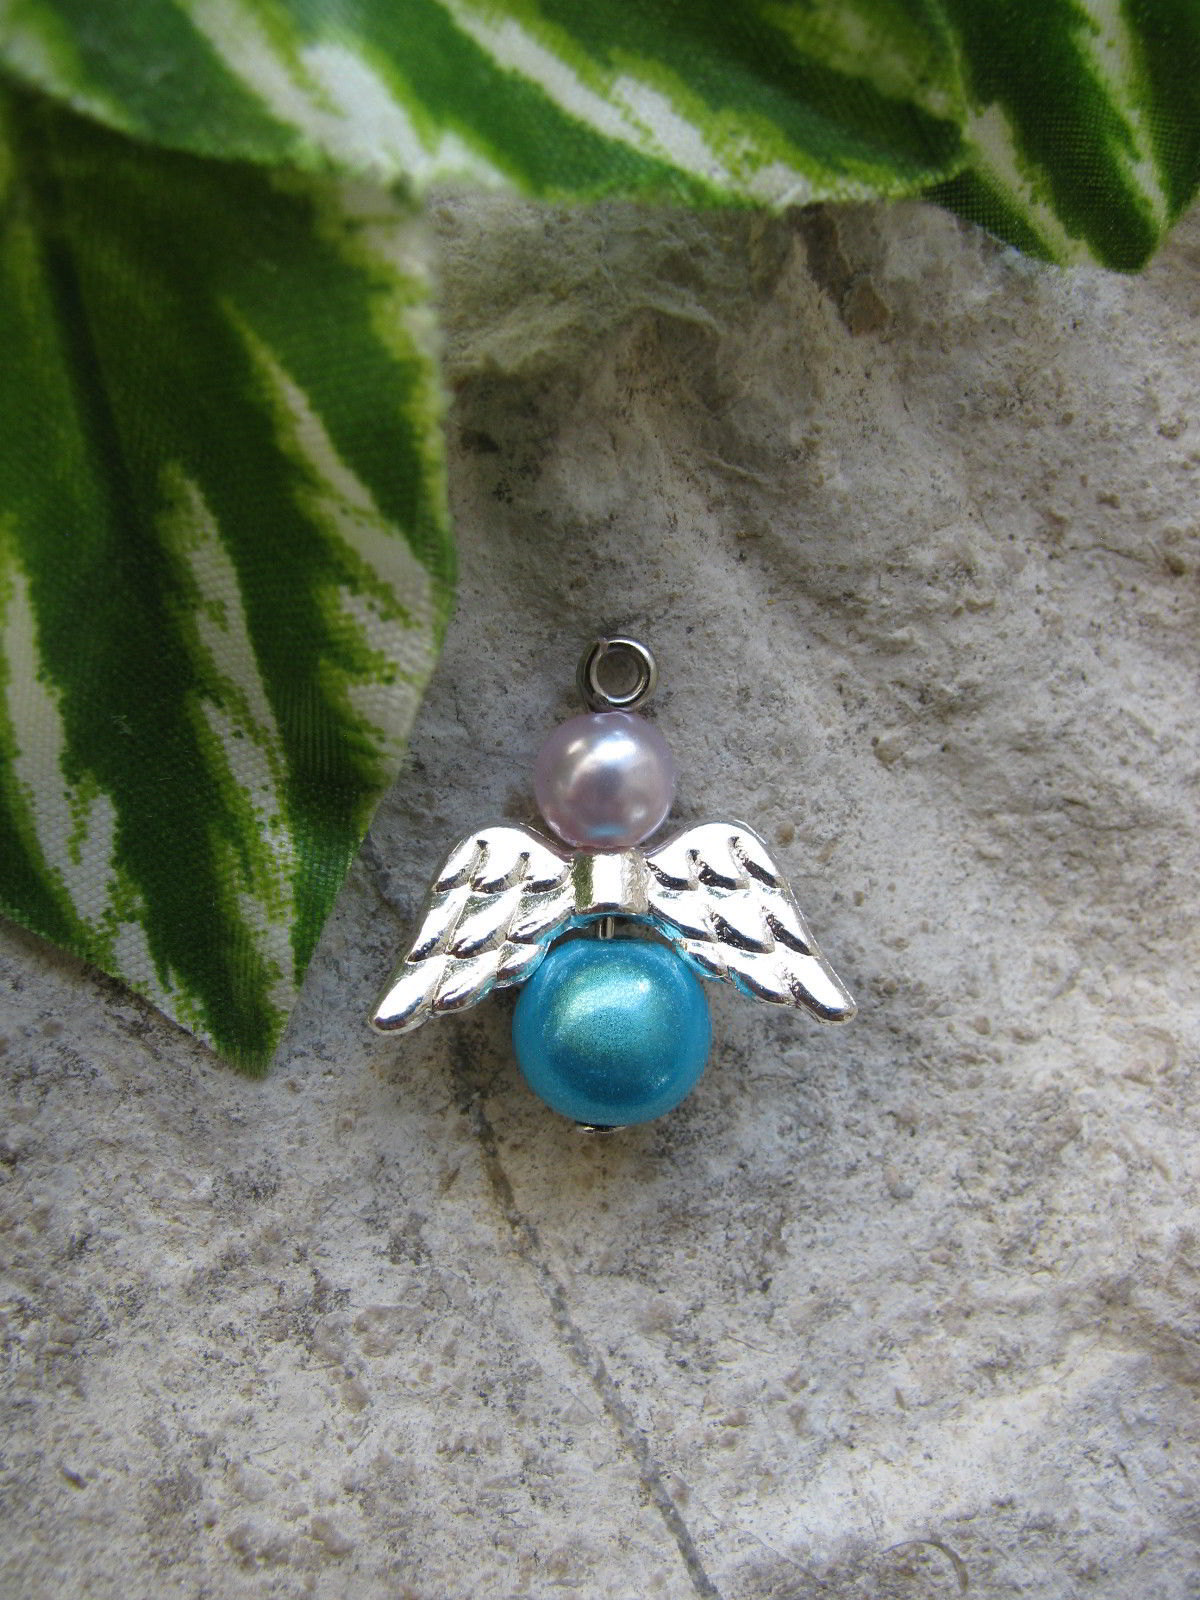 10 Metallperlen Flügel in silber hell, 1,95 cm Schutzengel mit Perlen basteln